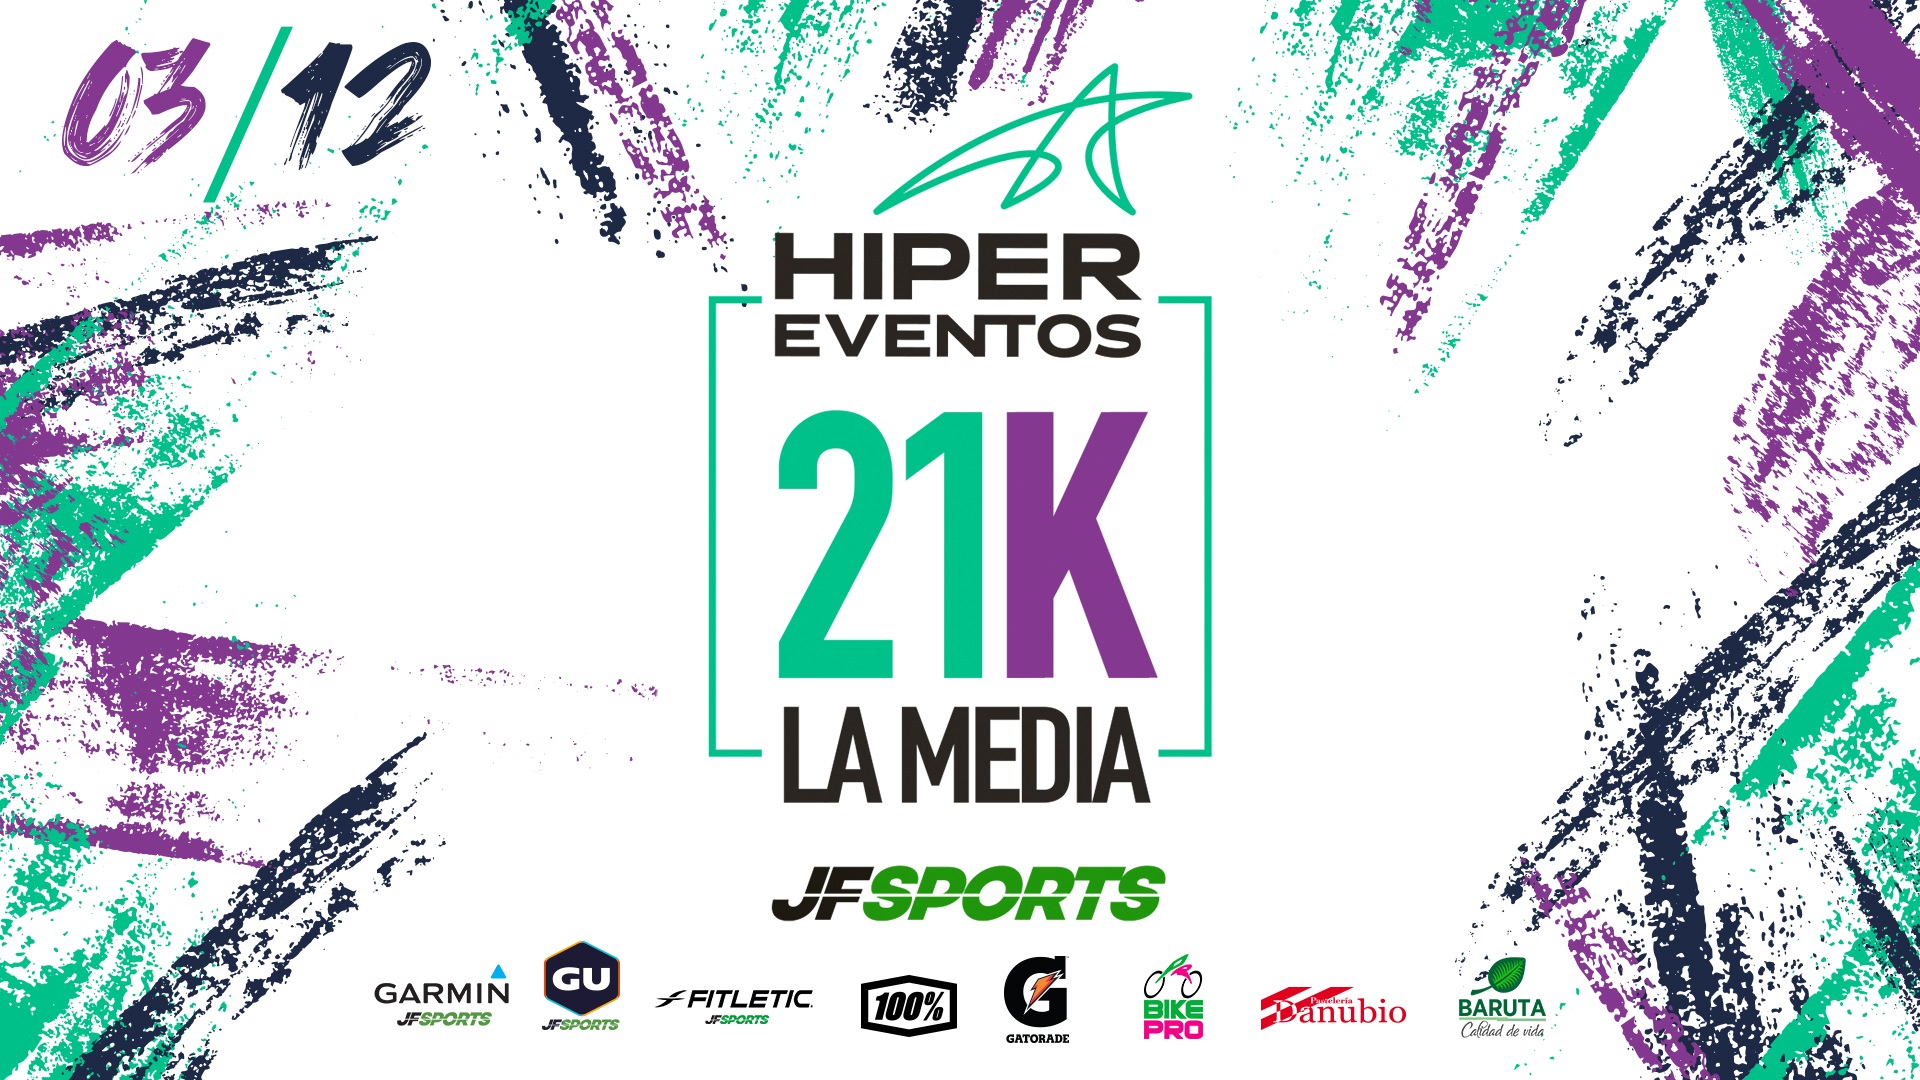 La Media Hipereventos - JFSports